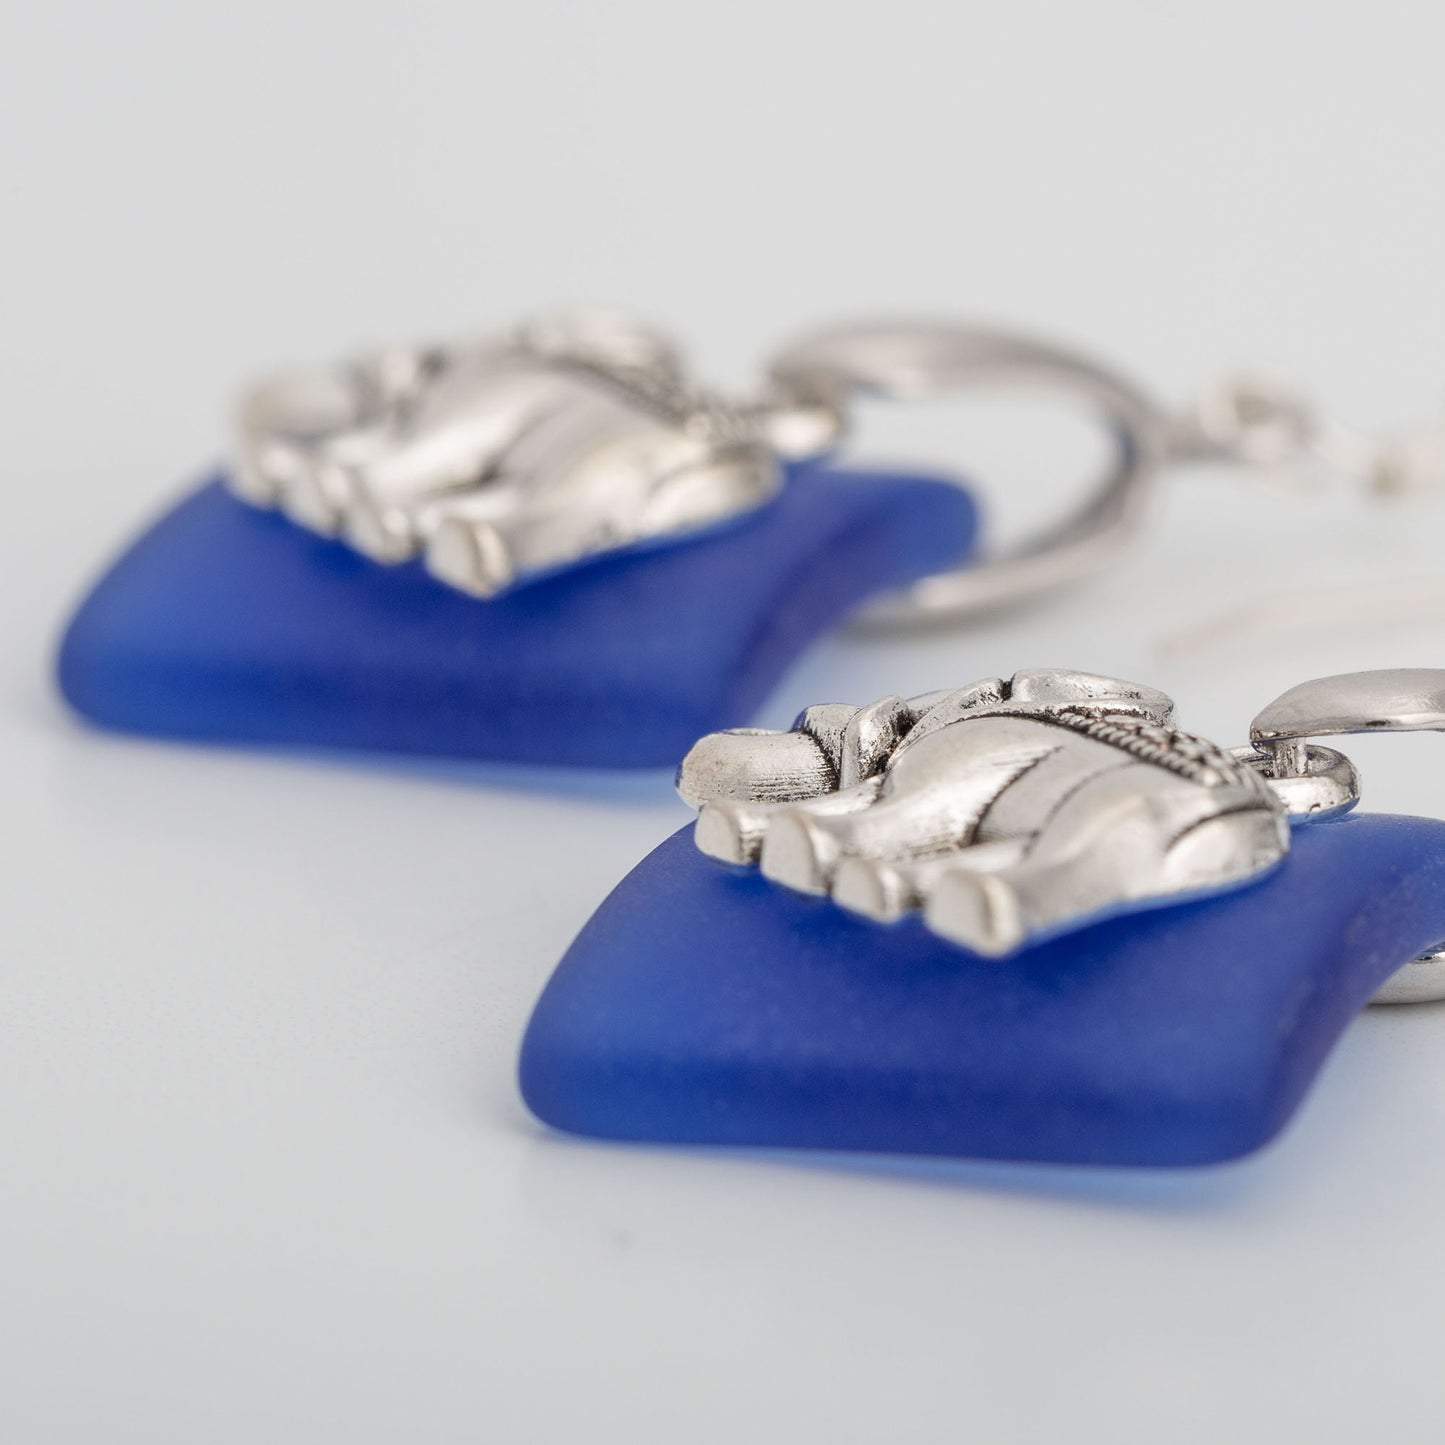 Elephant Sea Glass Earrings